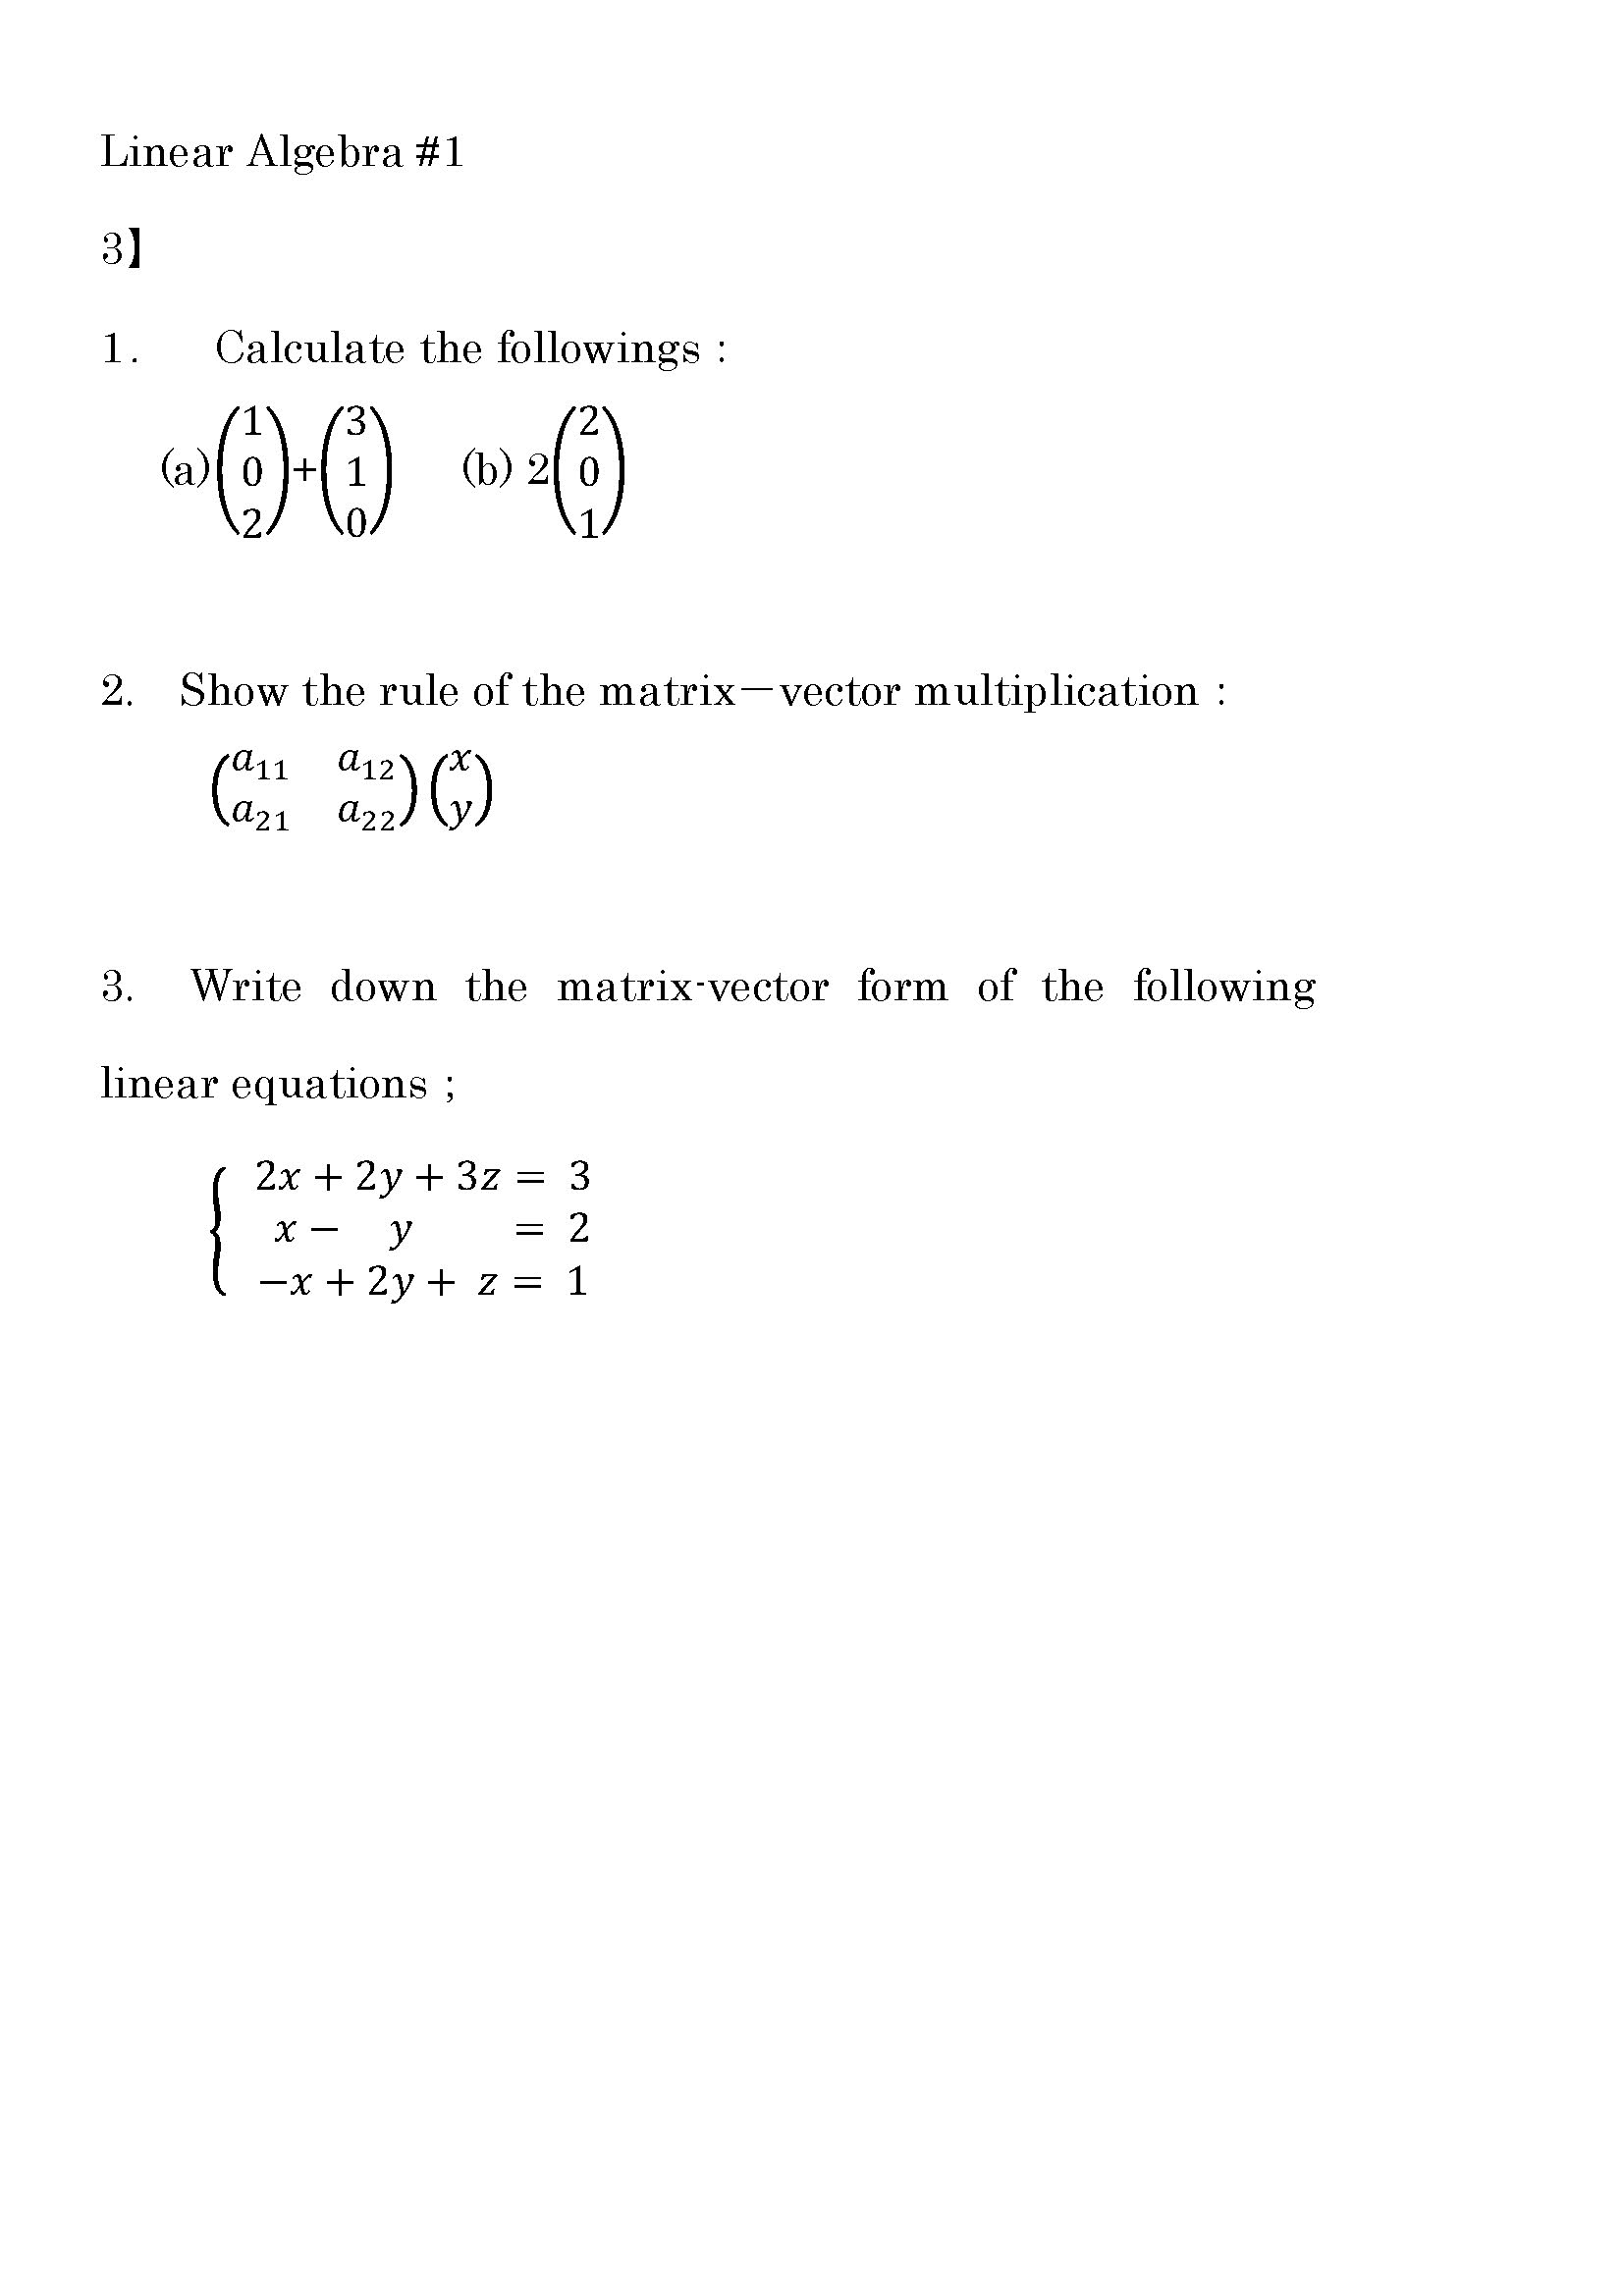 Linear_Algebra_Quiz_1-3-tate.jpg